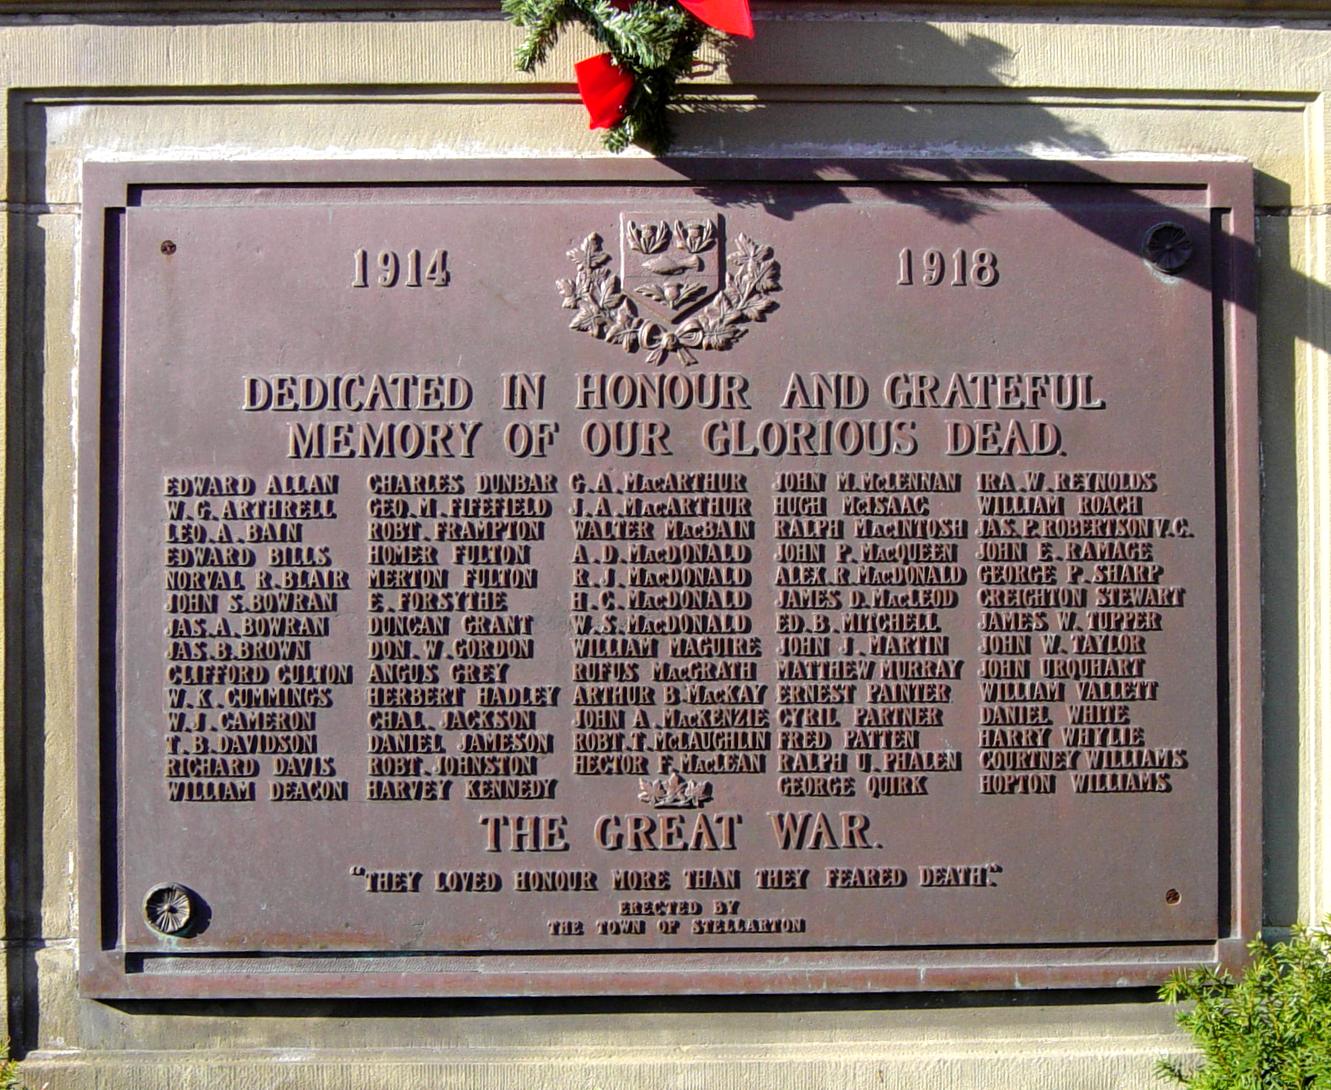 Nova Scotia, Stellarton: World War One memorial plaque